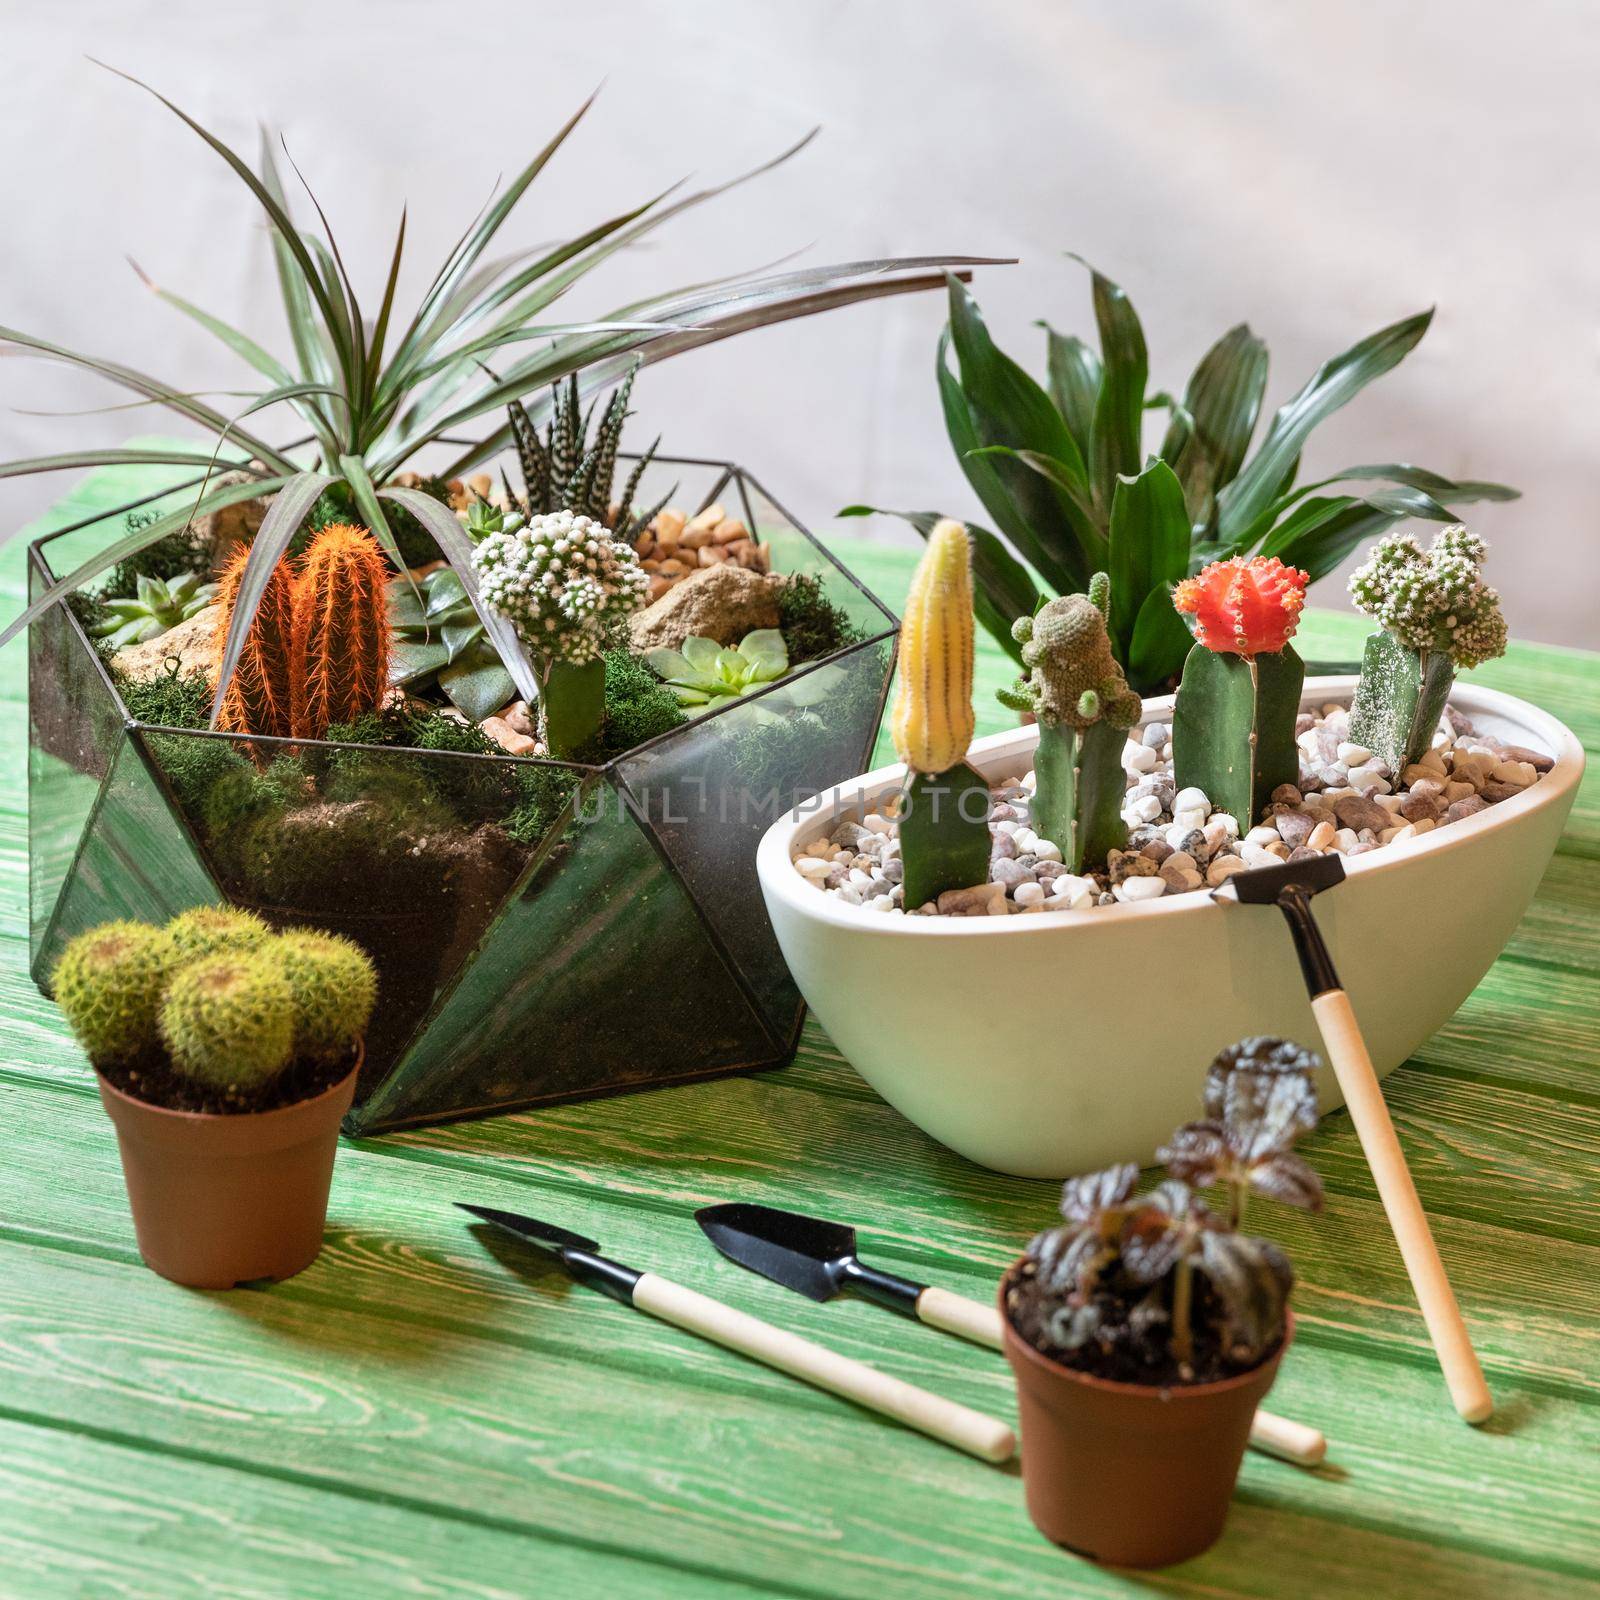 Terrarium, Moon Cactus, Succulent, mini shovels on the green table